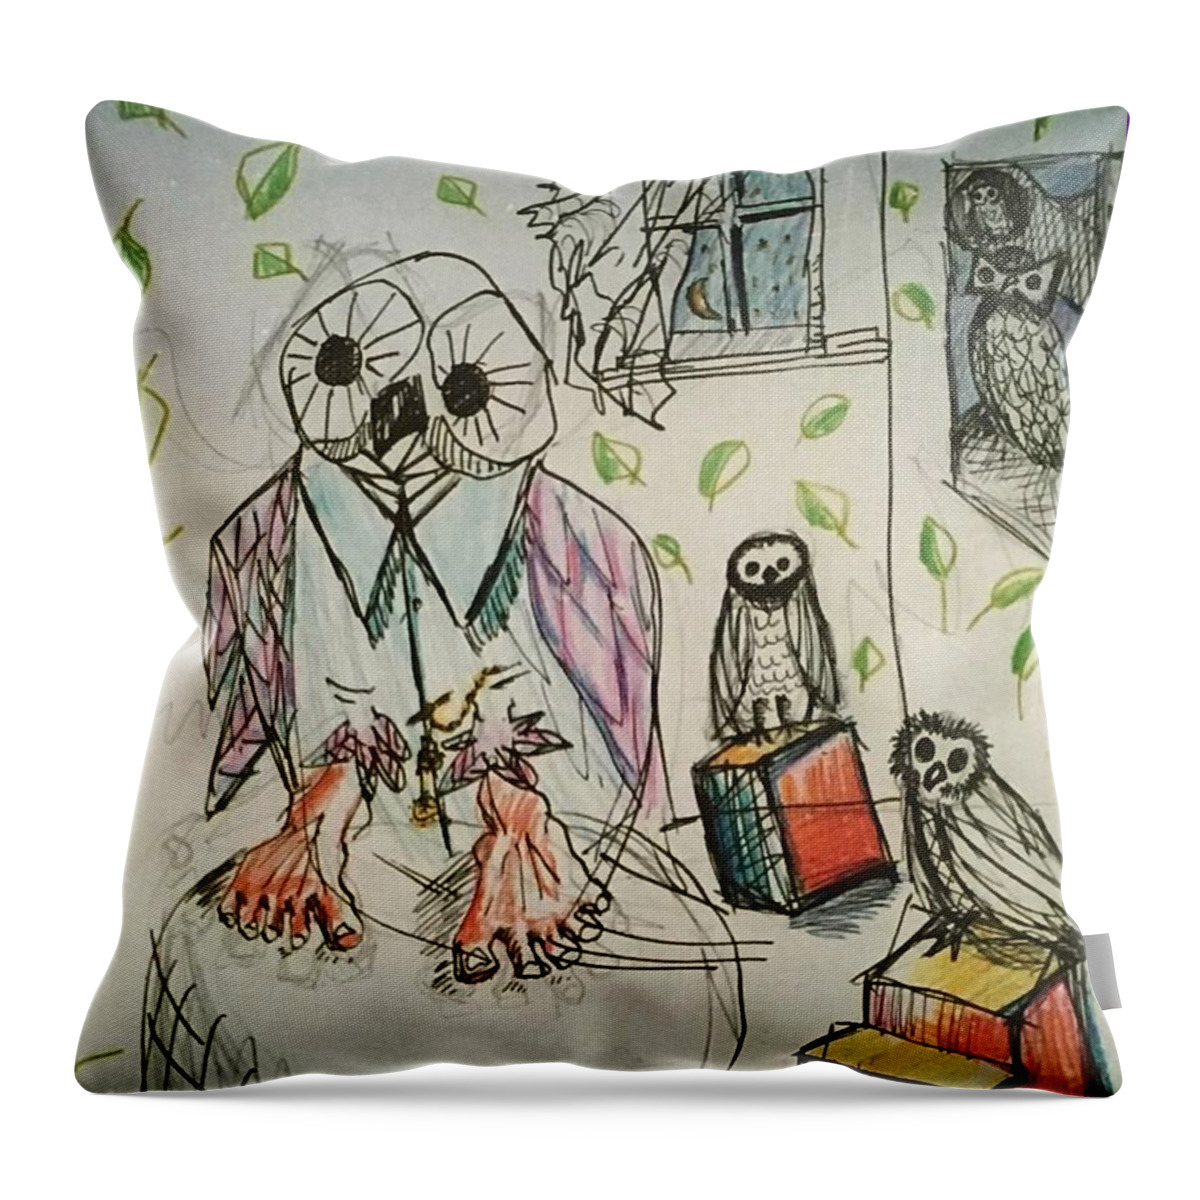 Owls Throw Pillow featuring the mixed media Creativity by Ricardo Penalver deceased